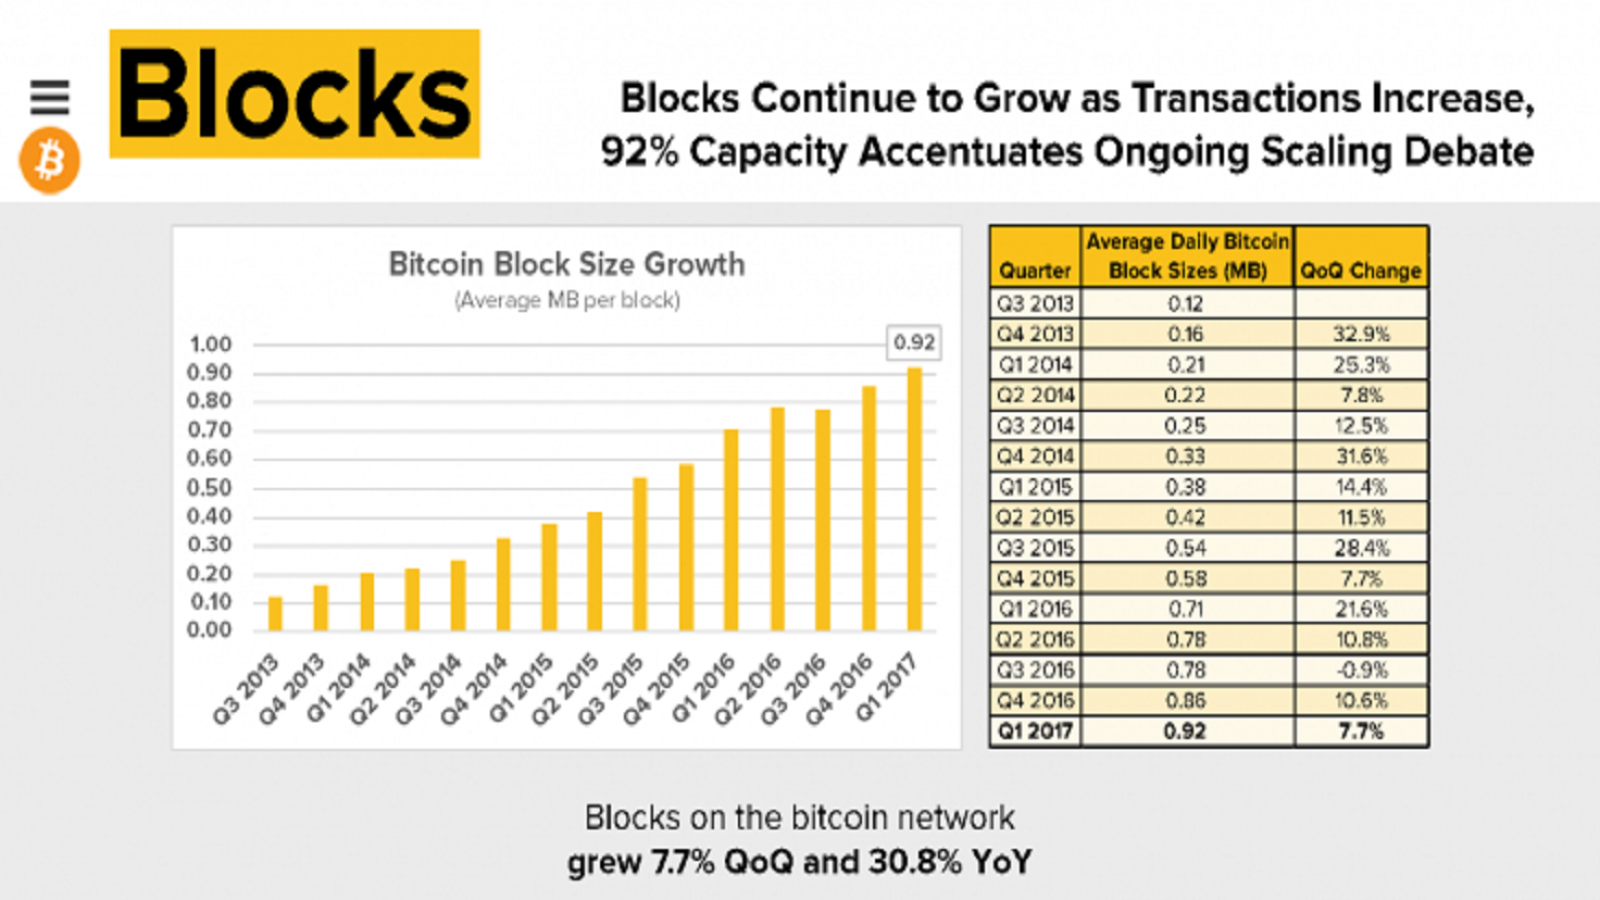 Blocks on the Bitcoin Network